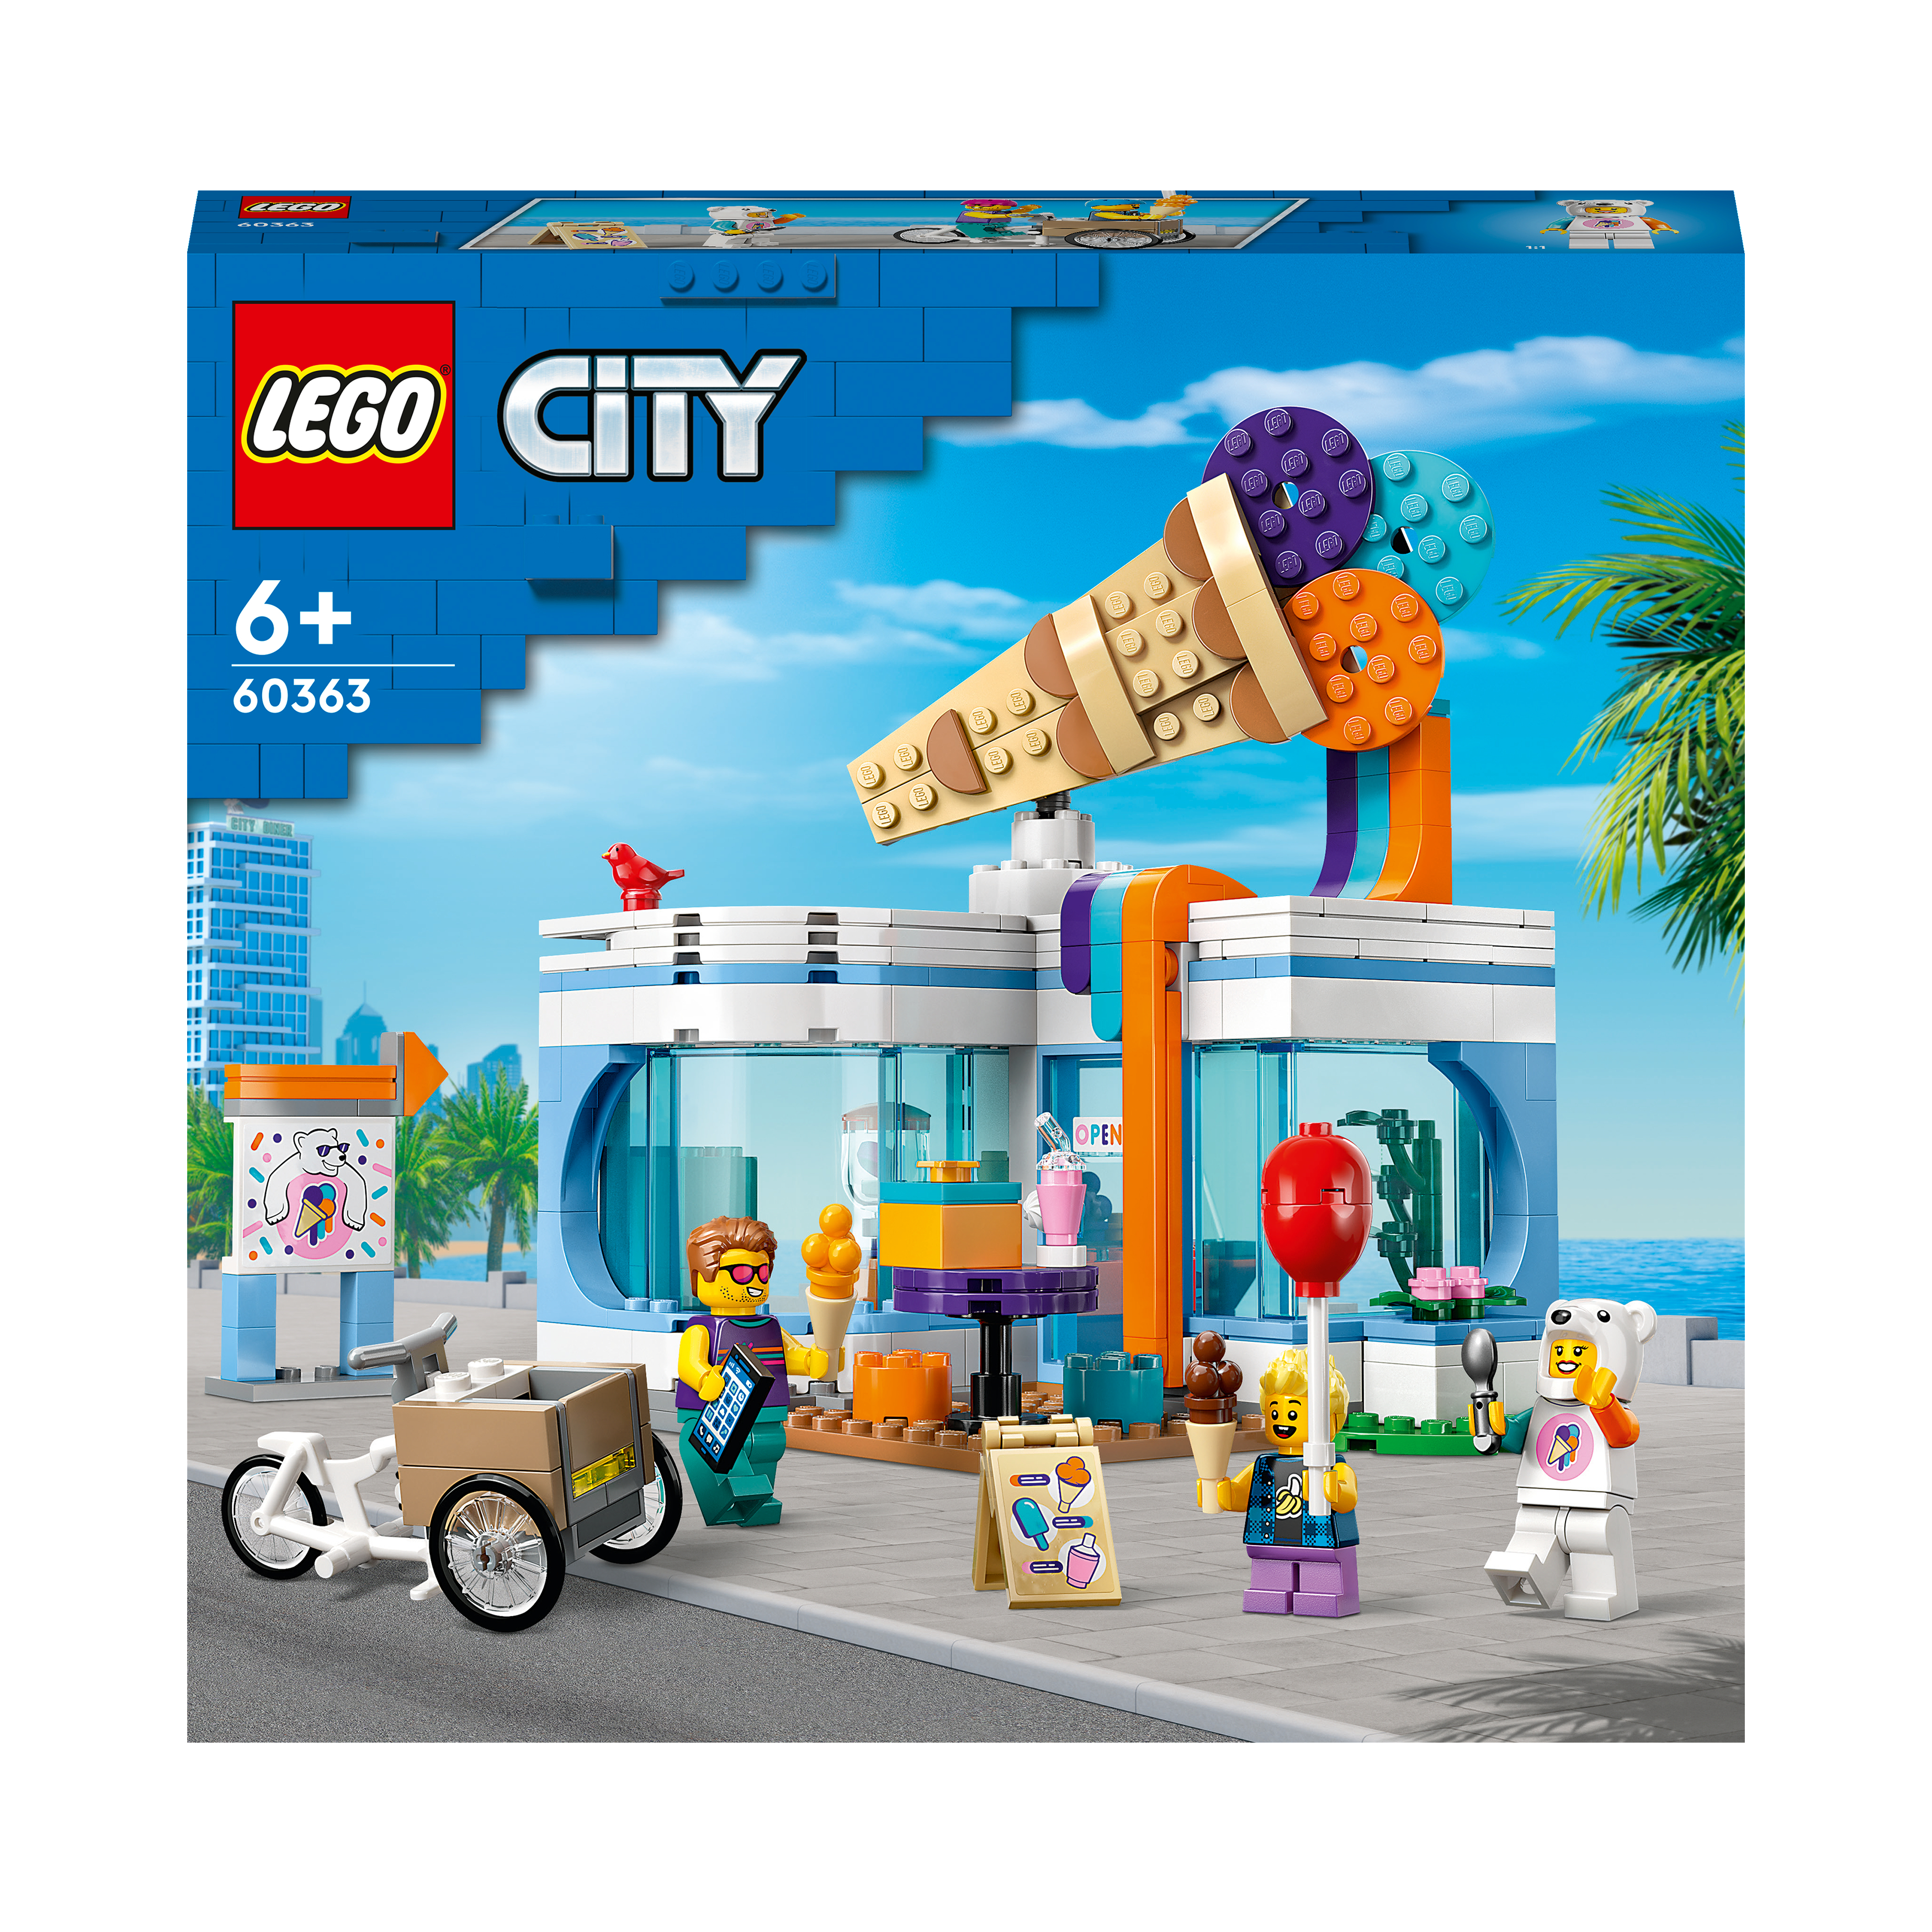 LEGO City 60363 Eisdiele Bausatz, Mehrfarbig